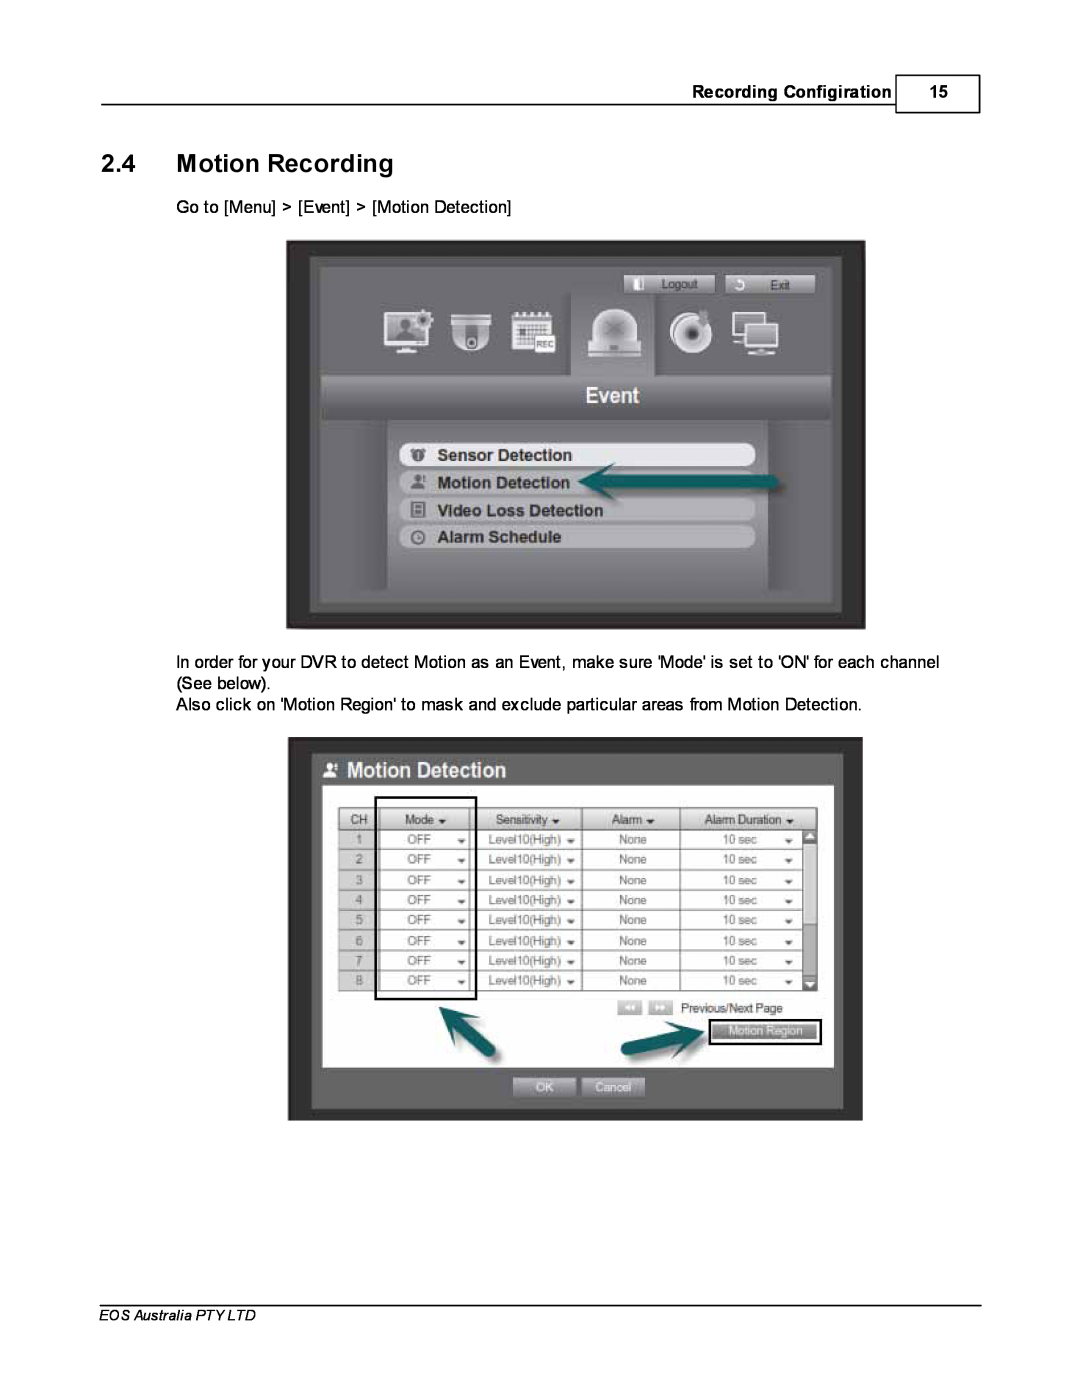 Samsung SDR4200 manual 2.4Motion Recording, Recording Configiration 